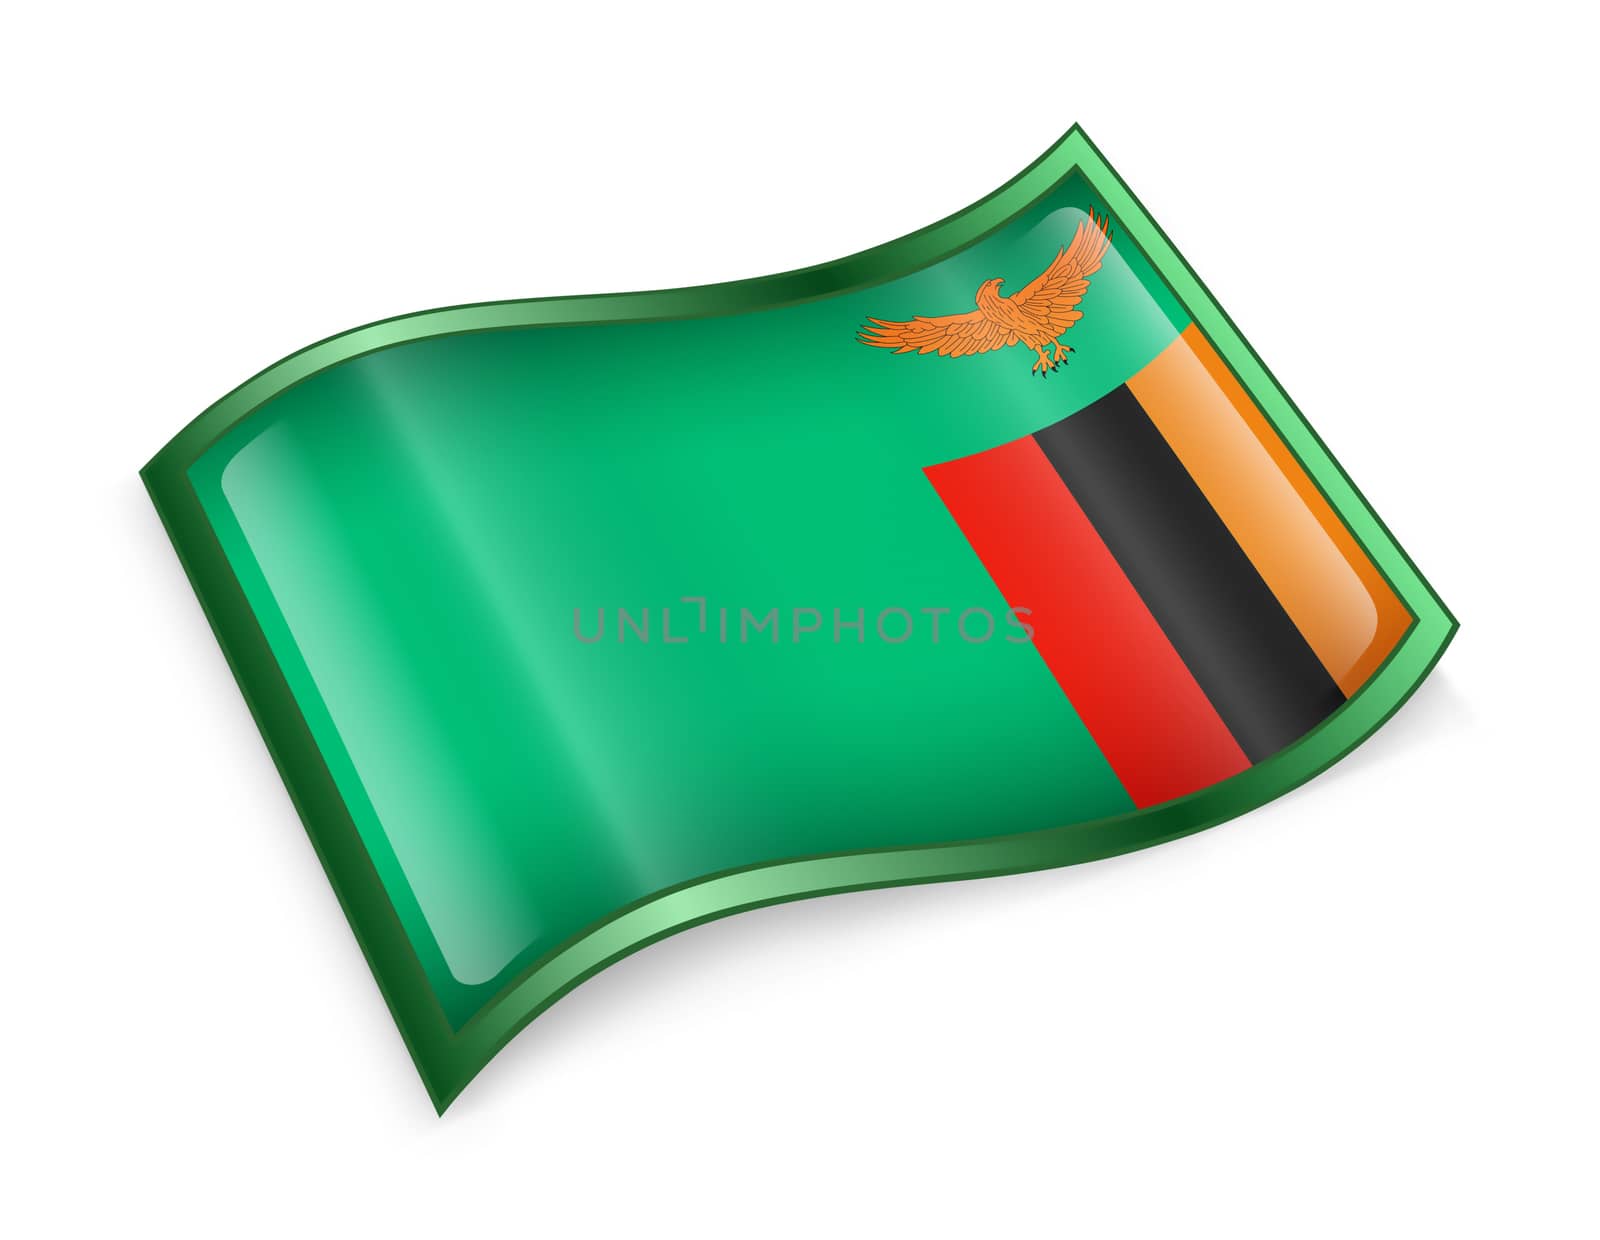 Zambia Flag icon, isolated on white background.